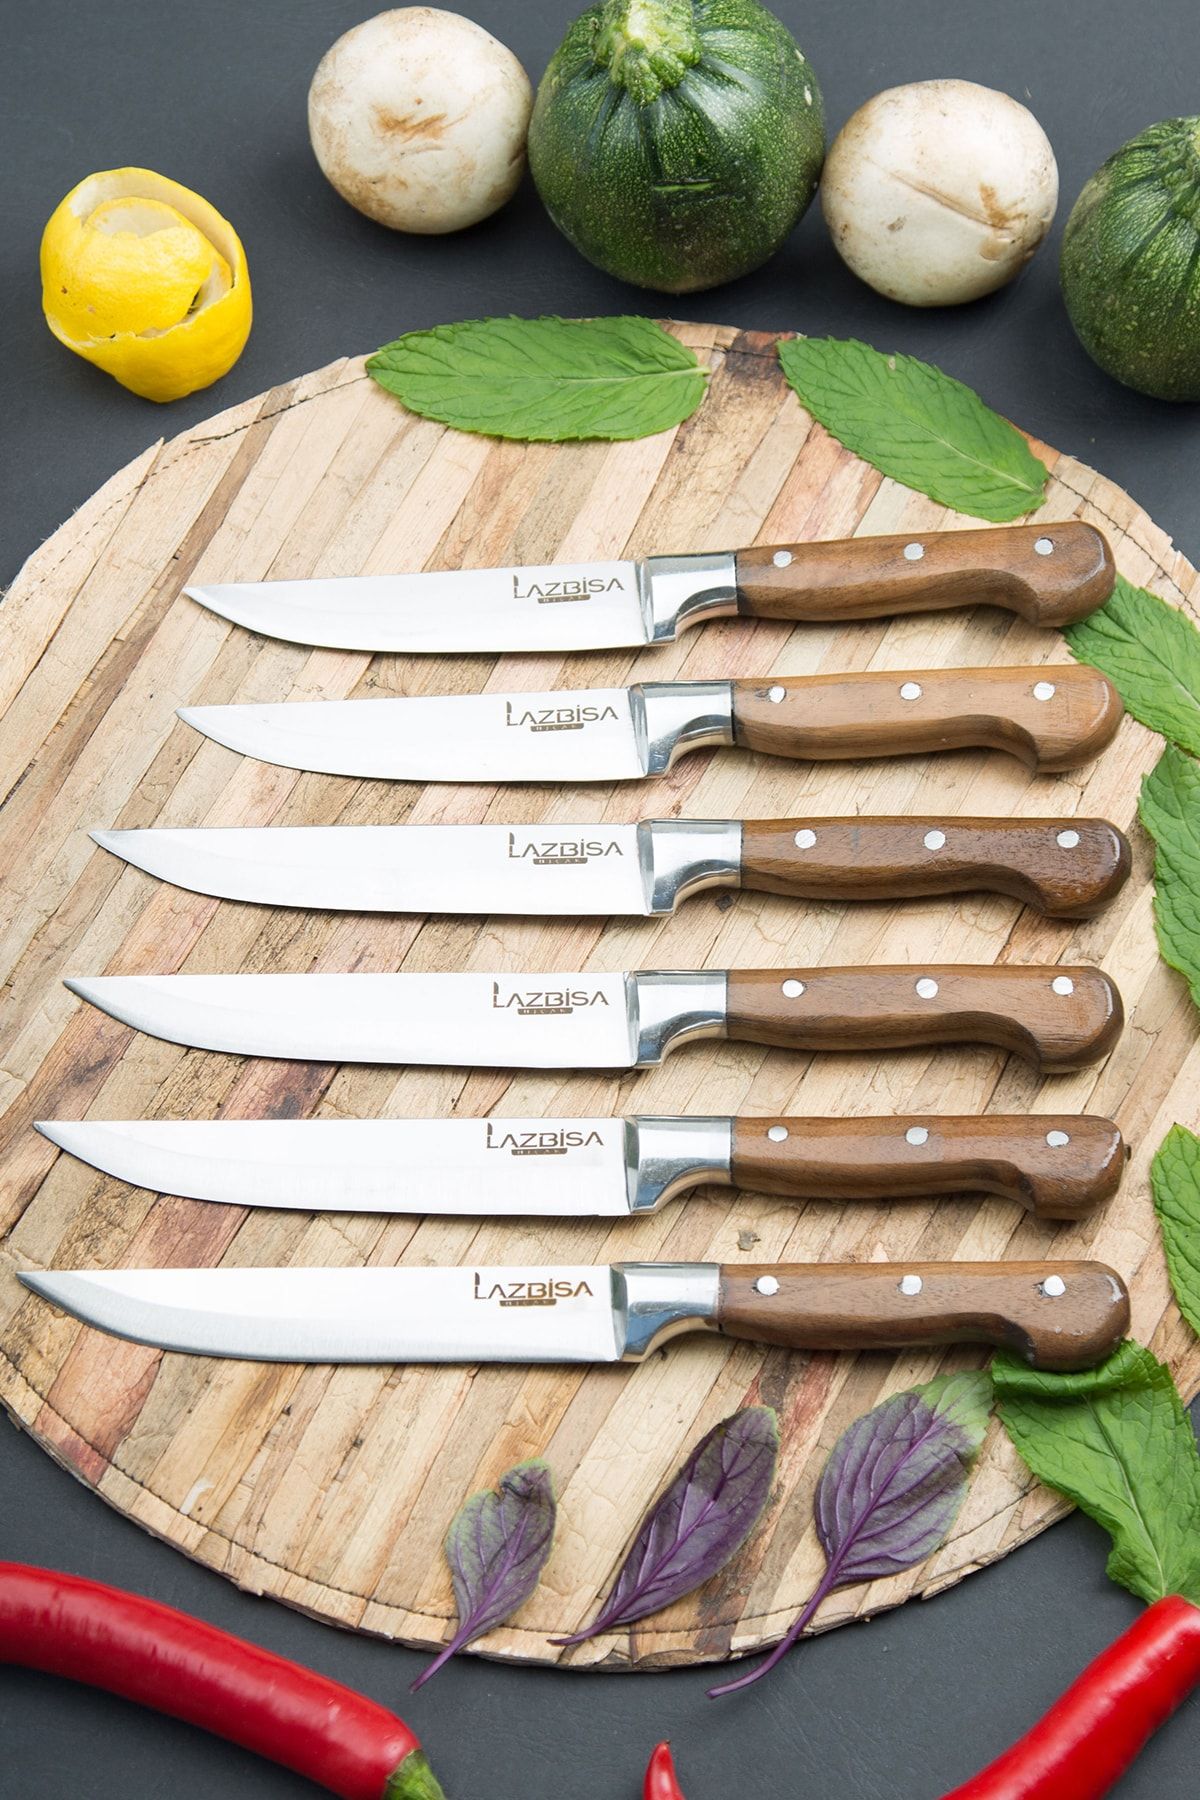 LAZBİSA Mutfak Bıçak Seti Et Meyve Sebze Ekmek Bıçağı 6 lı Set ( 1-2-3 )